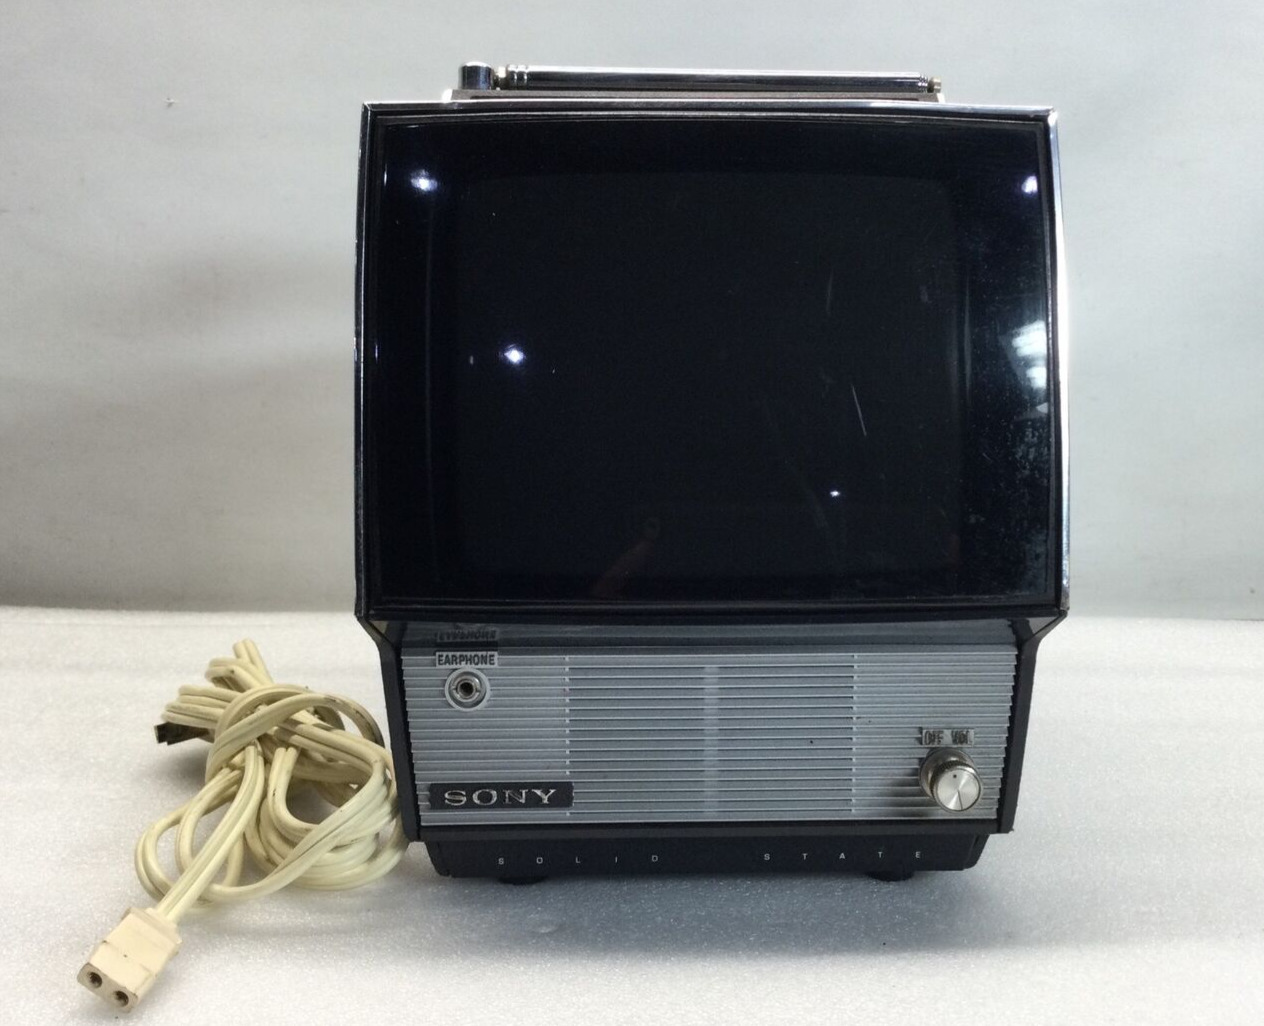 Vintage Sony Solid State Portable TV Model 700U